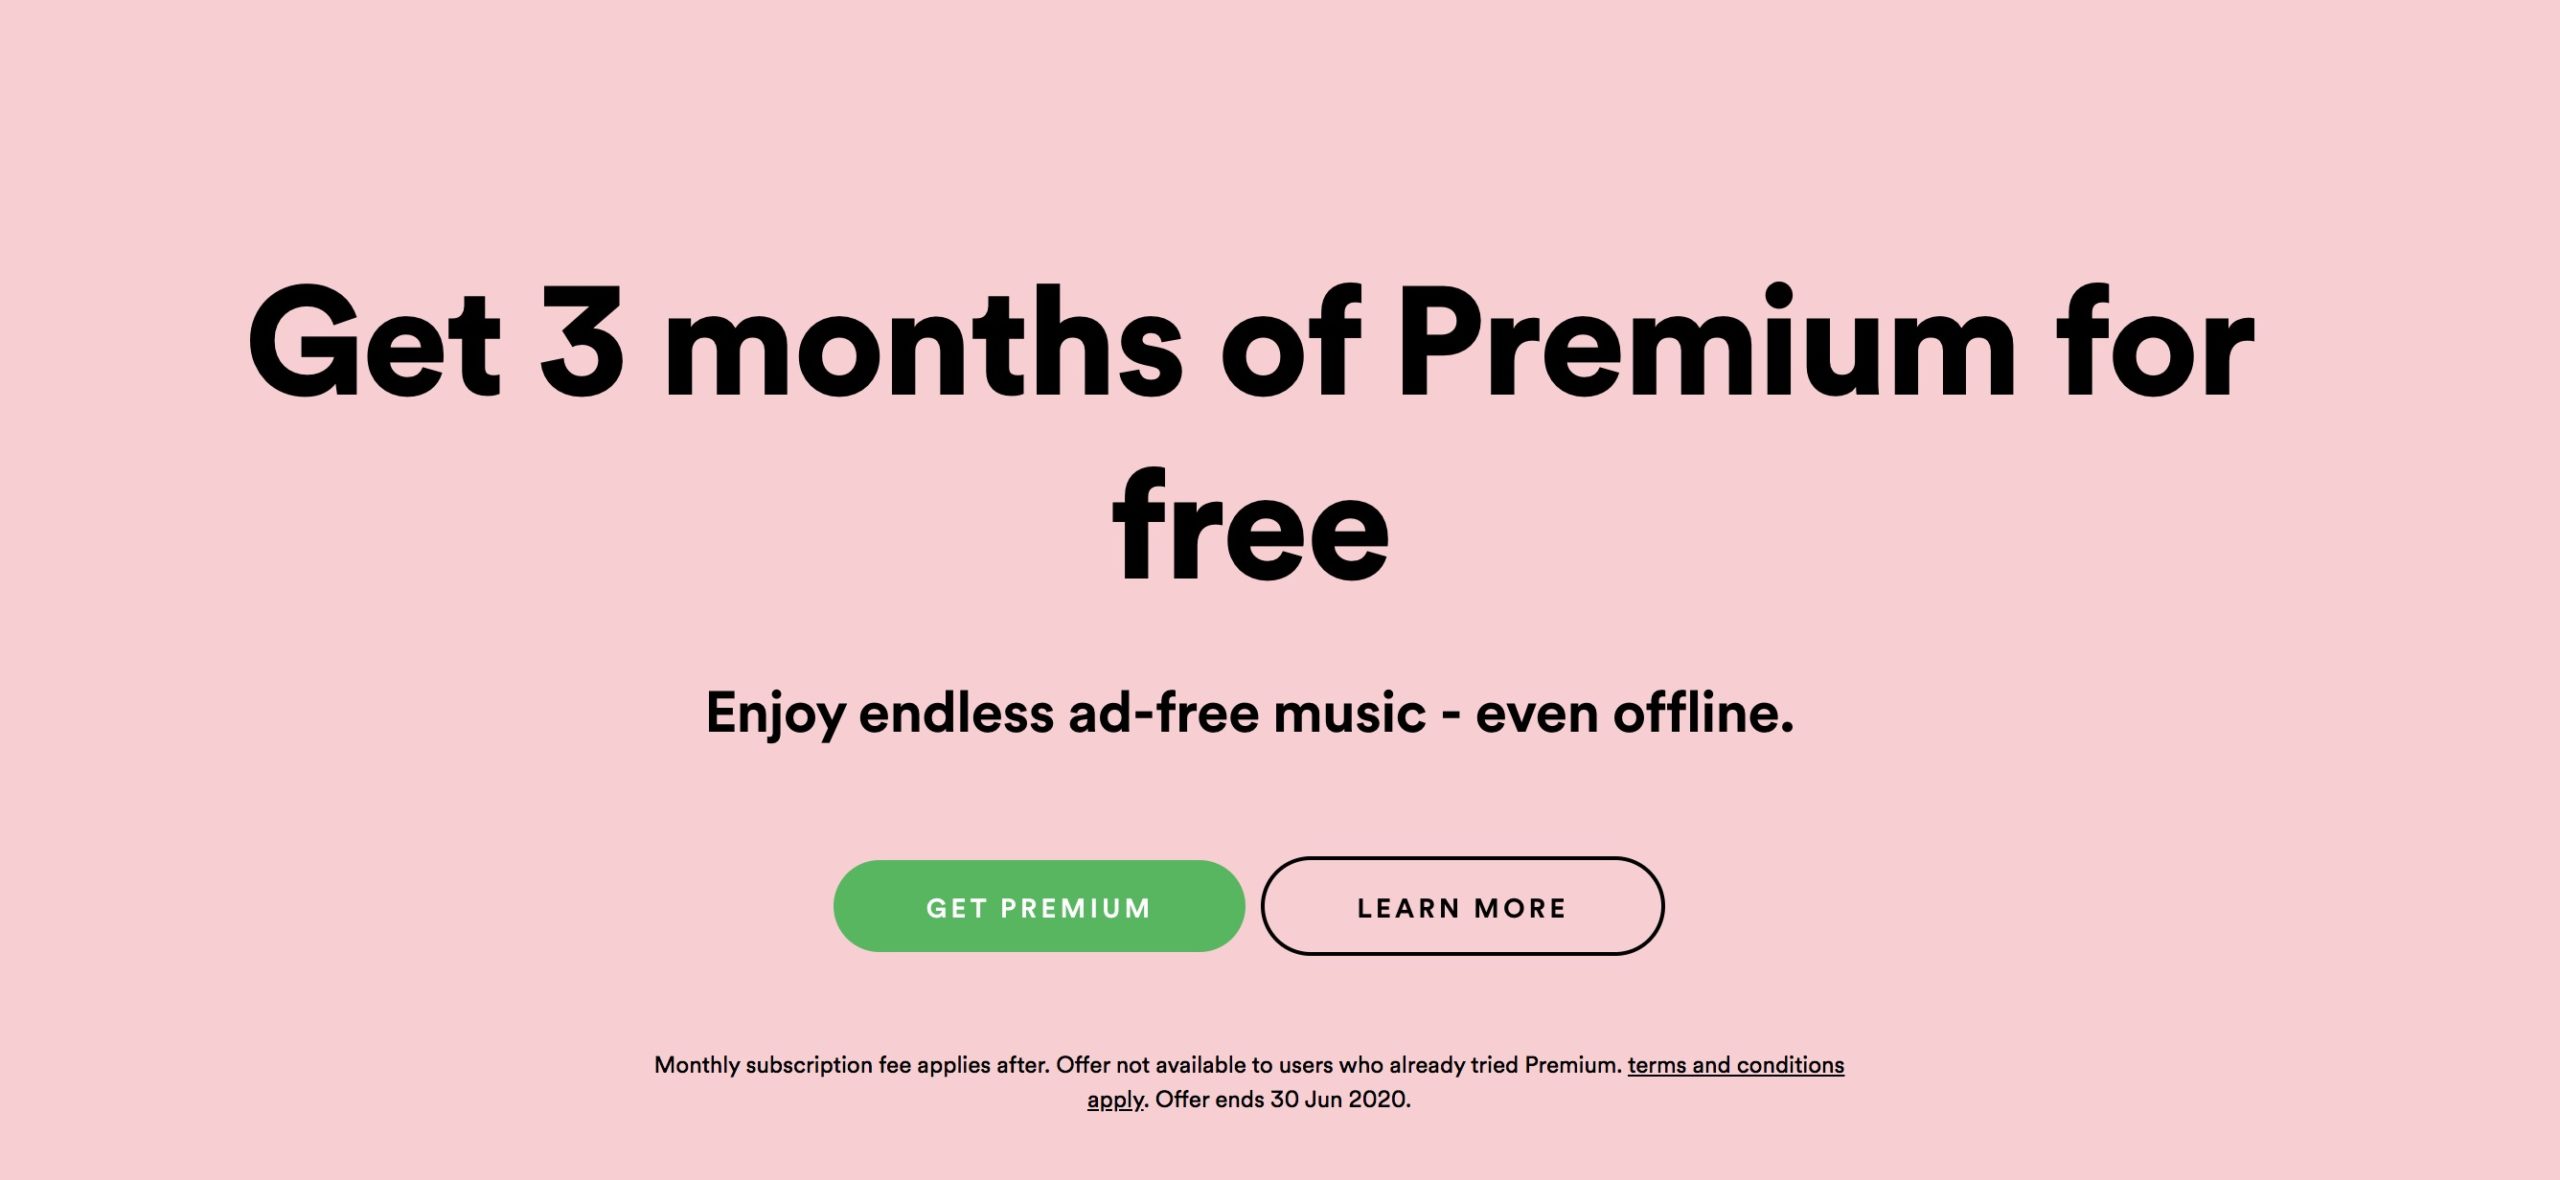 Spotify premium first 3 months free